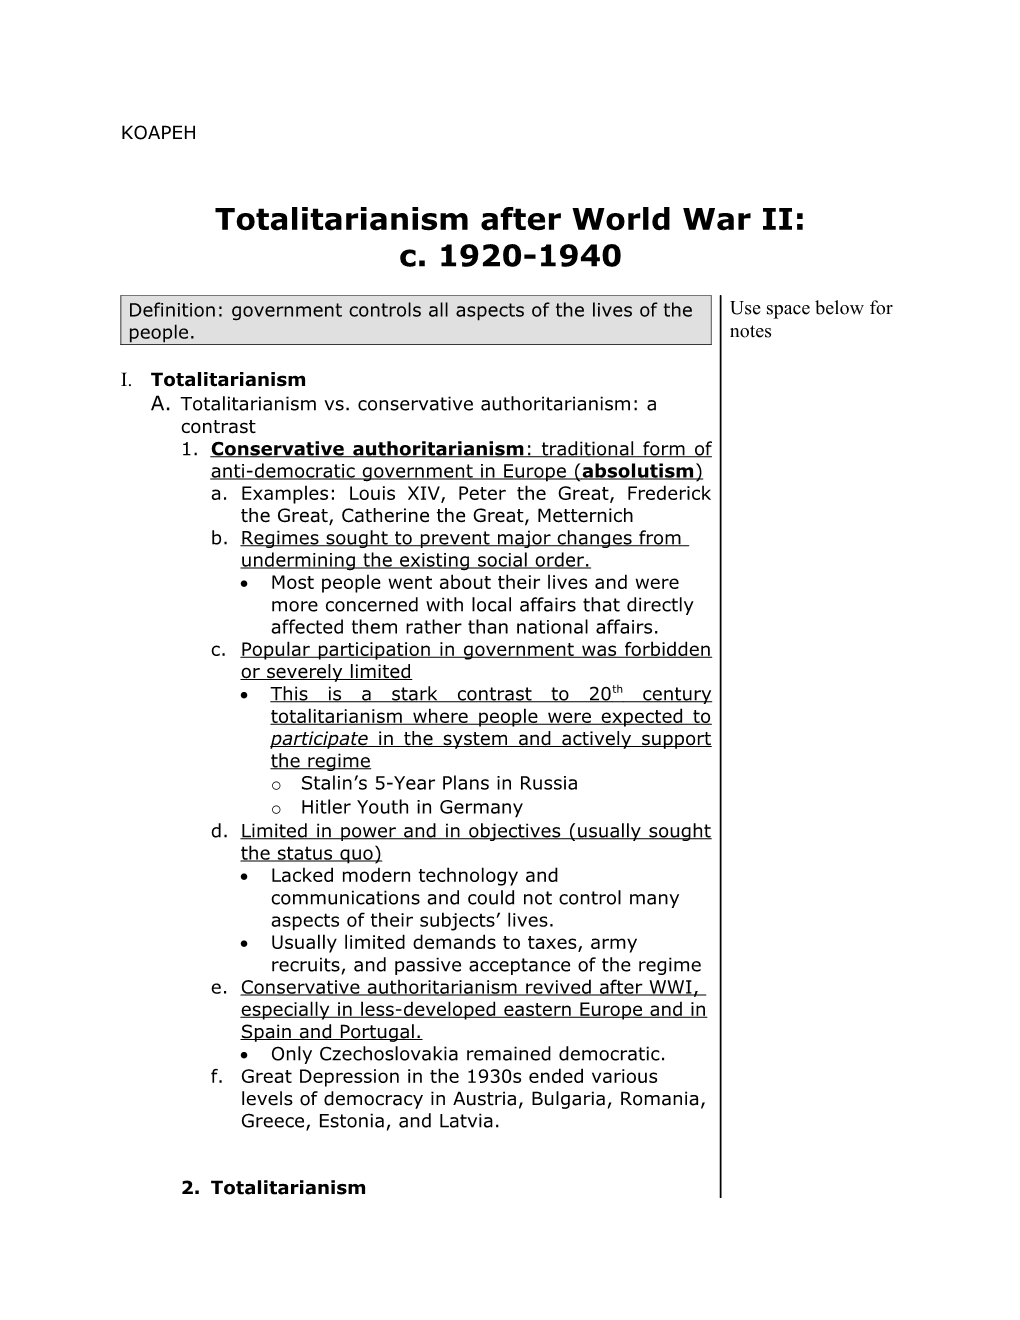 Totalitarianism After World War II: C. 1920-1940